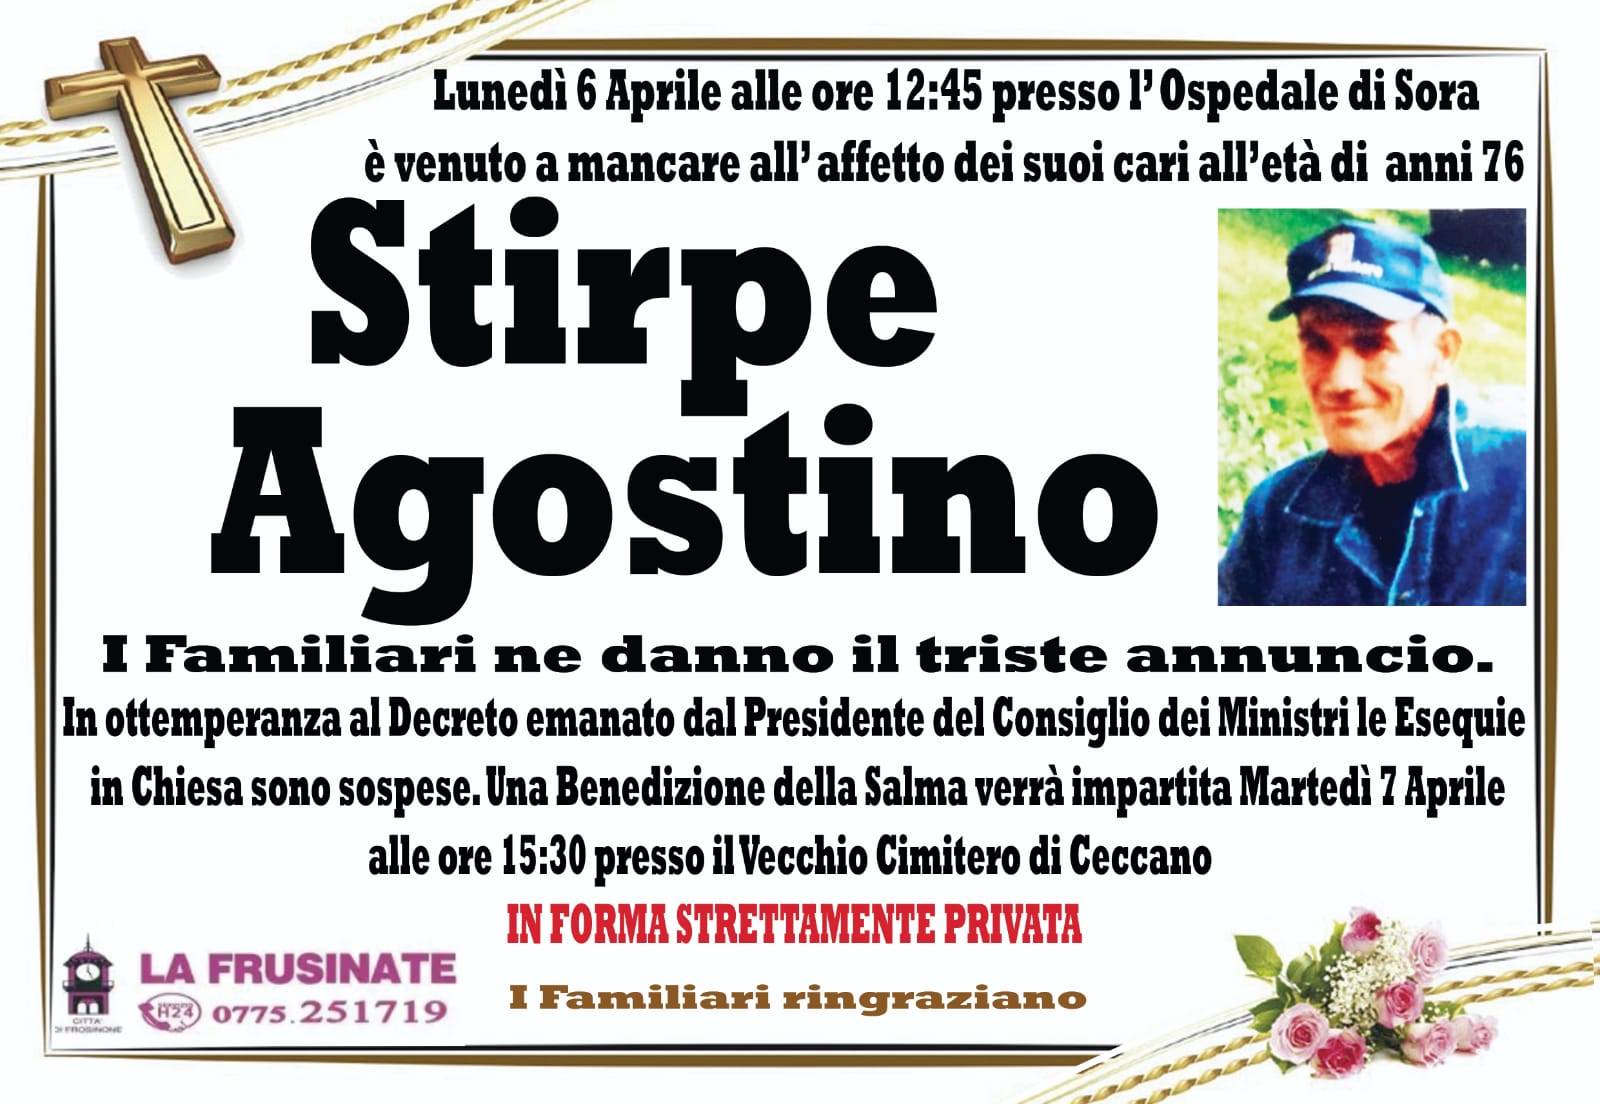 Agostino Stirpe